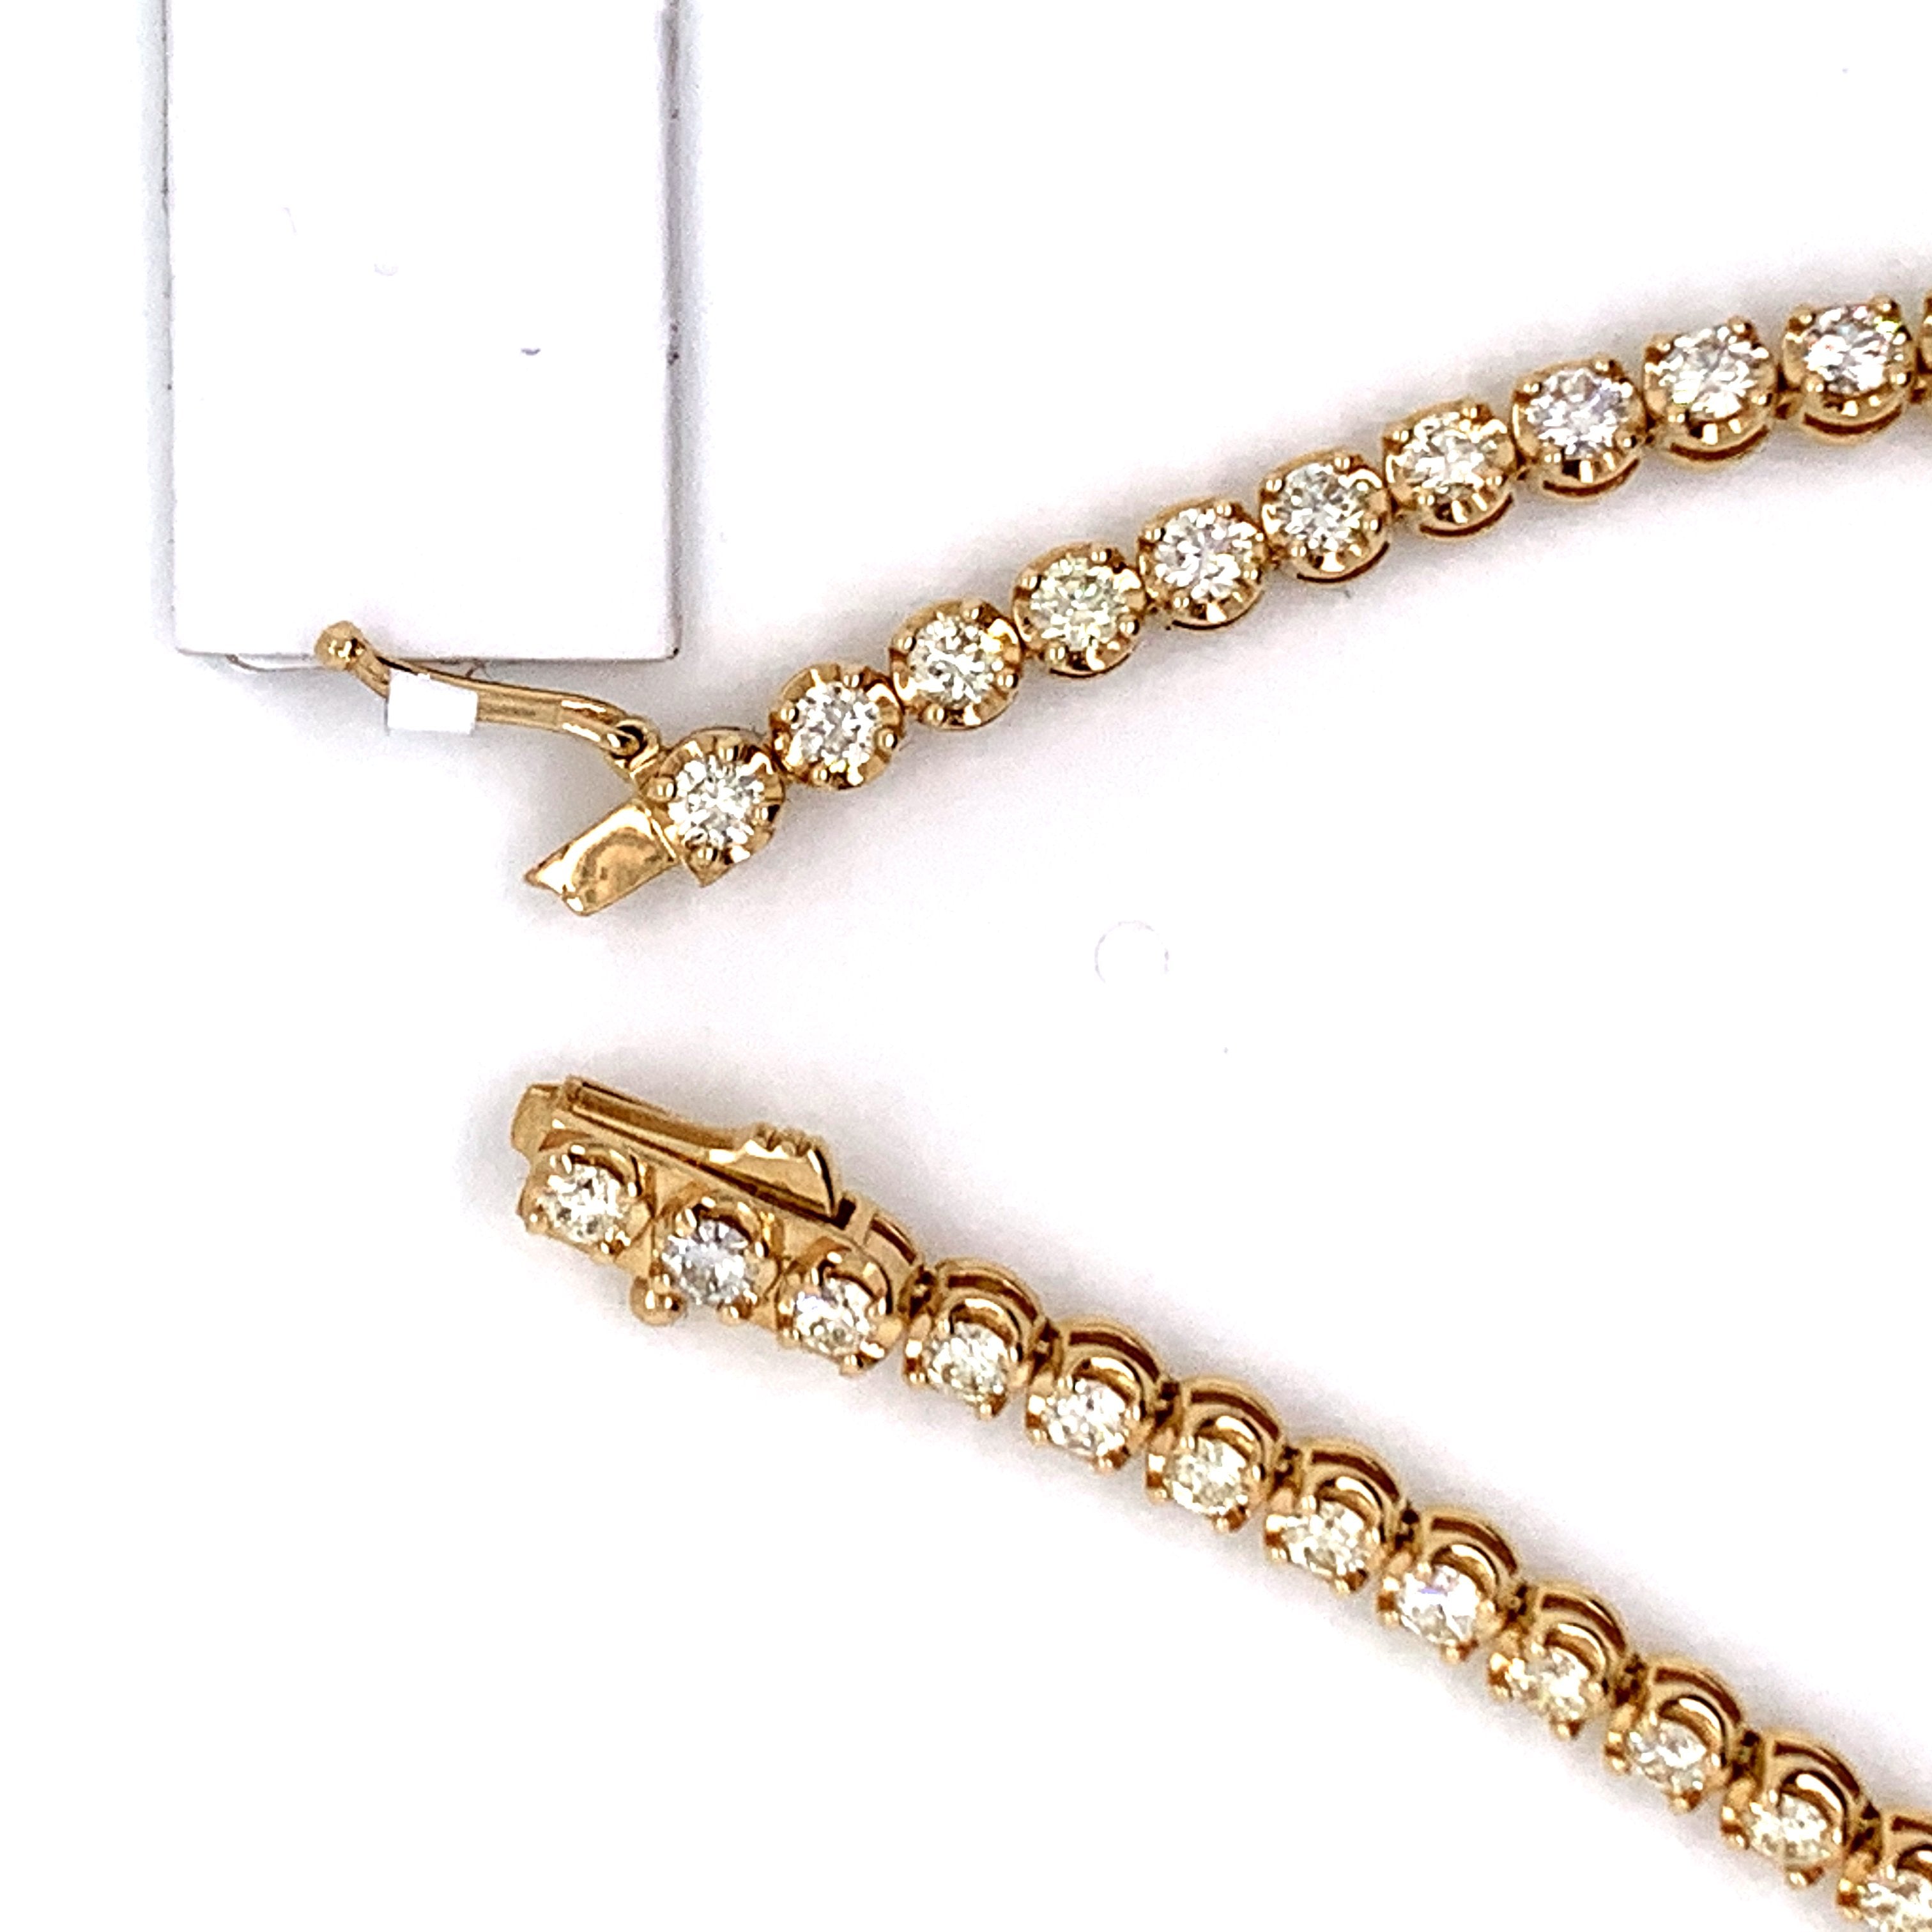 3.15CT Diamond Tennis Bracelet in 14K Gold - White Carat Diamonds 